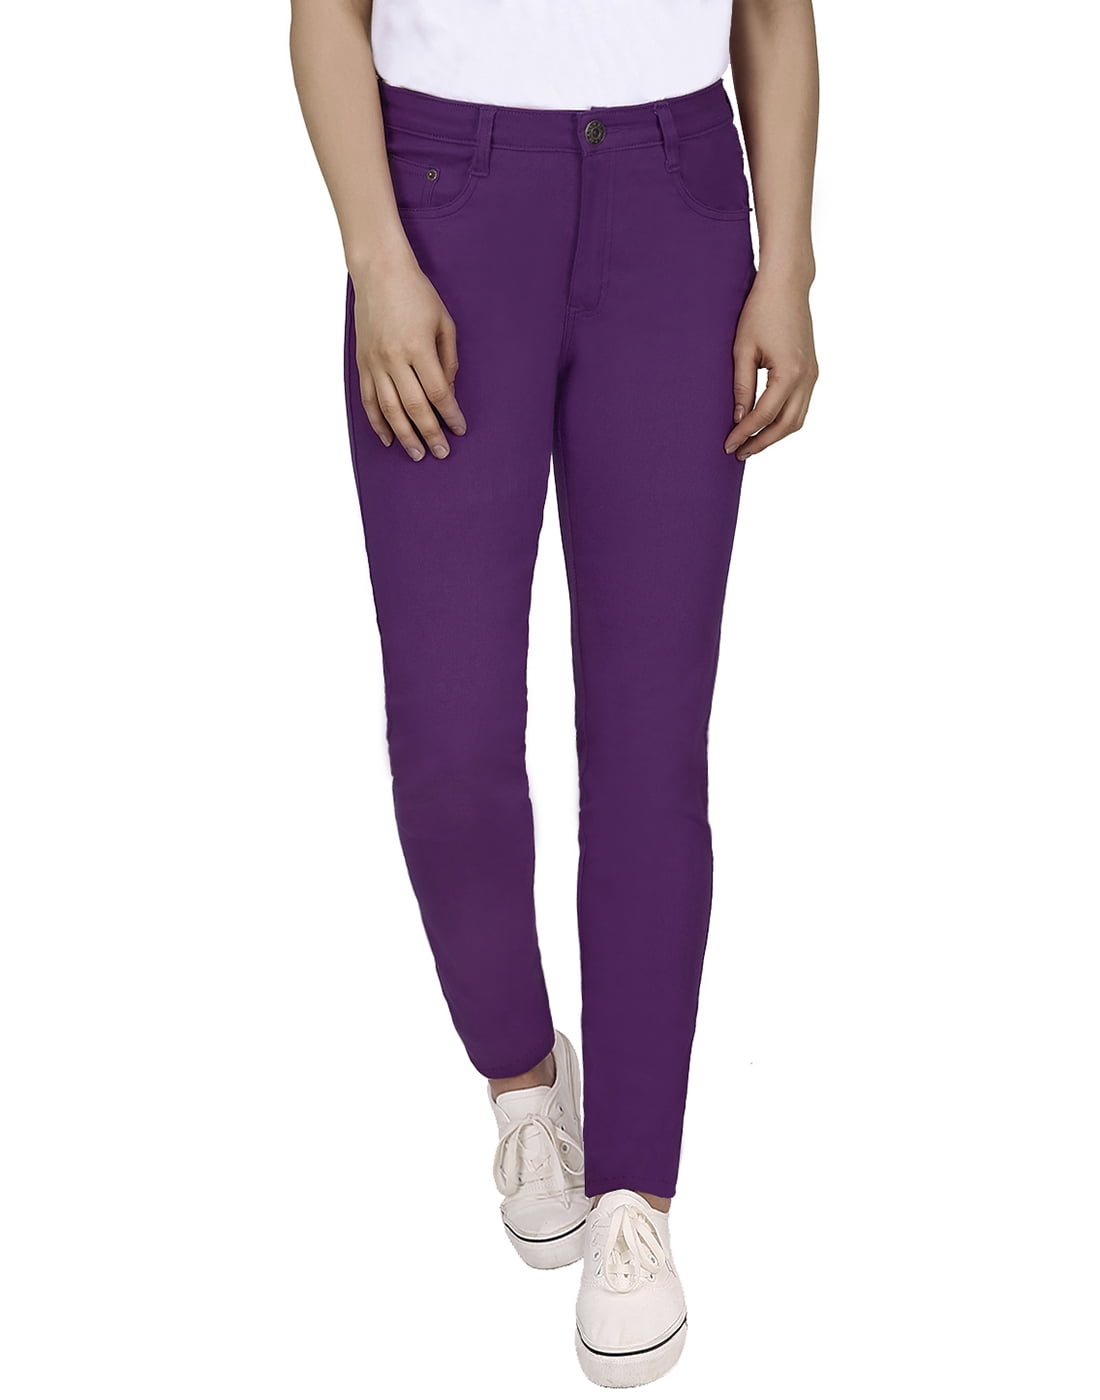 Women's Jeans Jeggings Five Pocket Stretch Denim Pants (Purple, Small) 